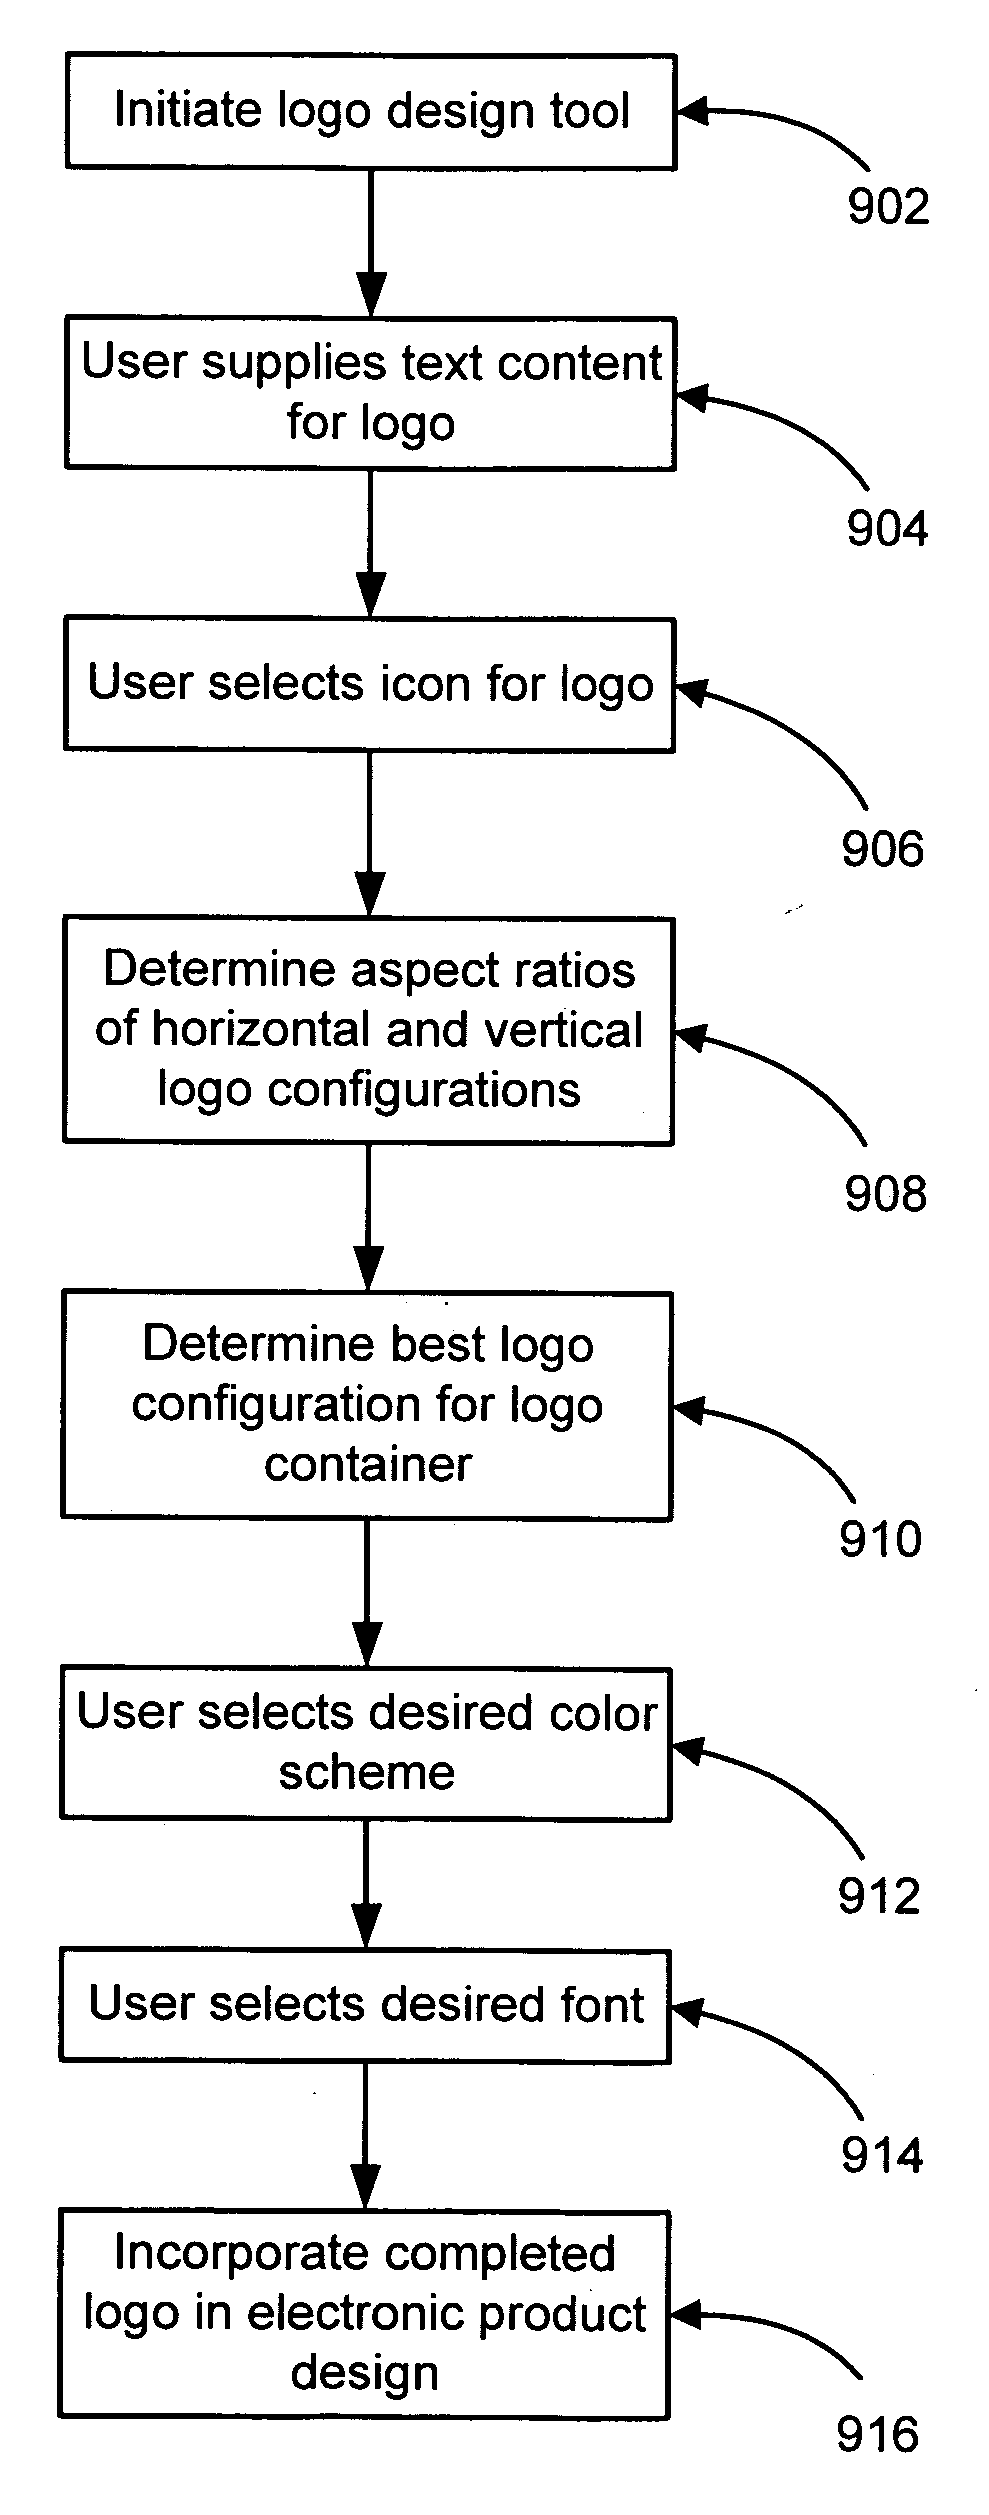 Automated composite image design